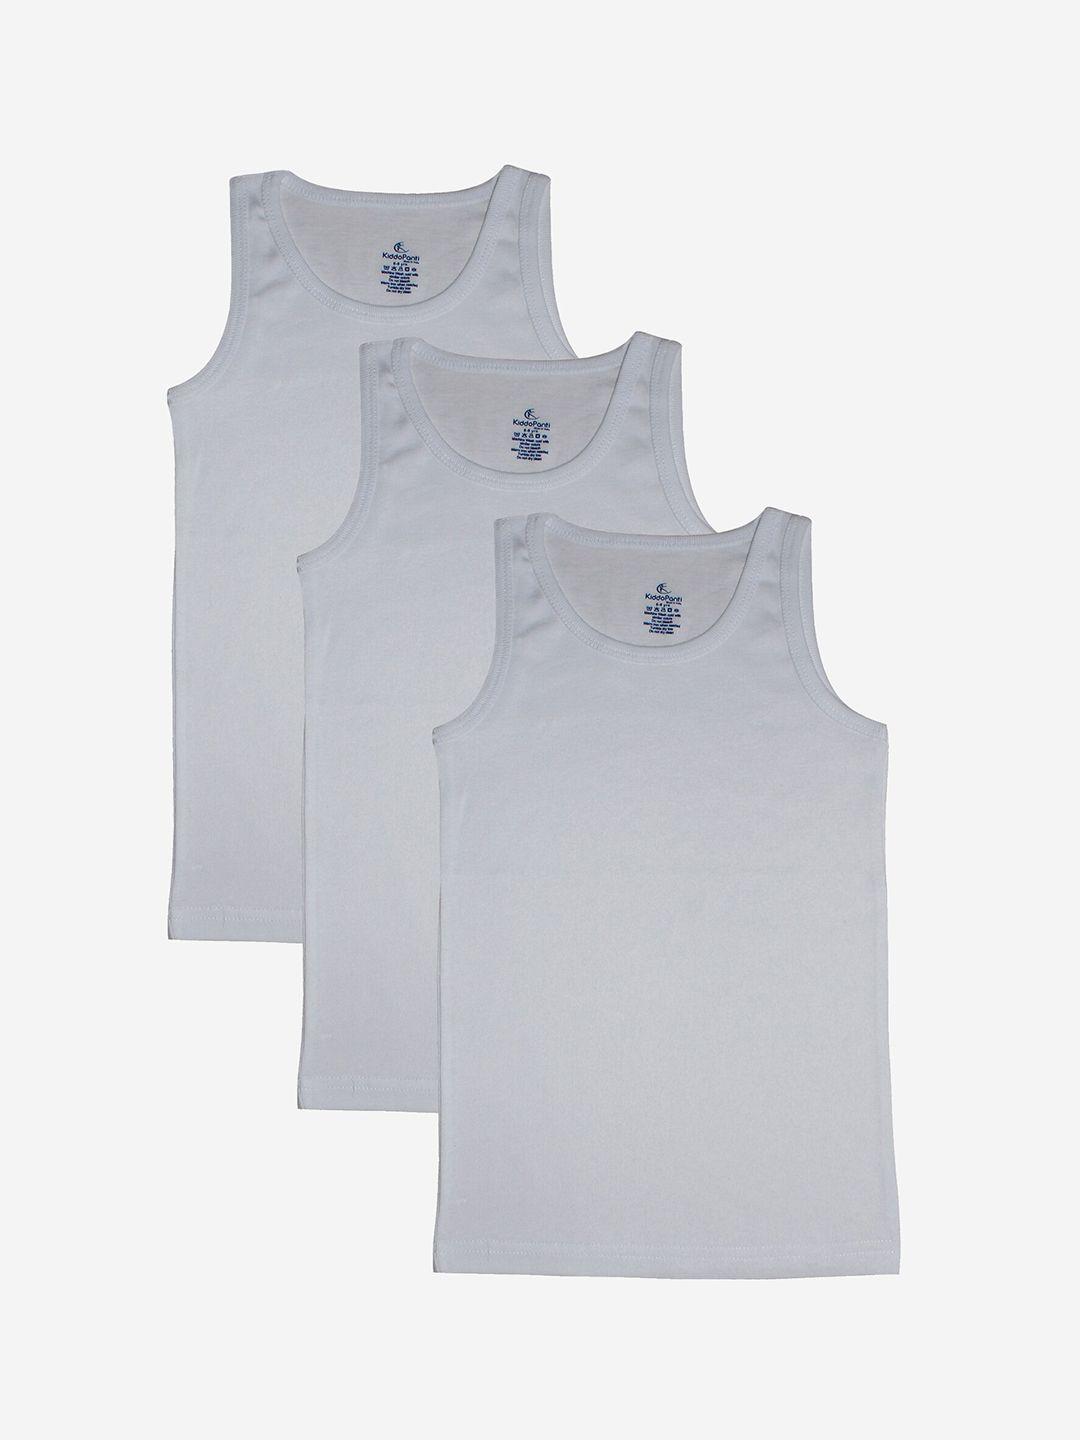 kiddopanti-boys-white-pack-of-3-solid-innerwear-vests